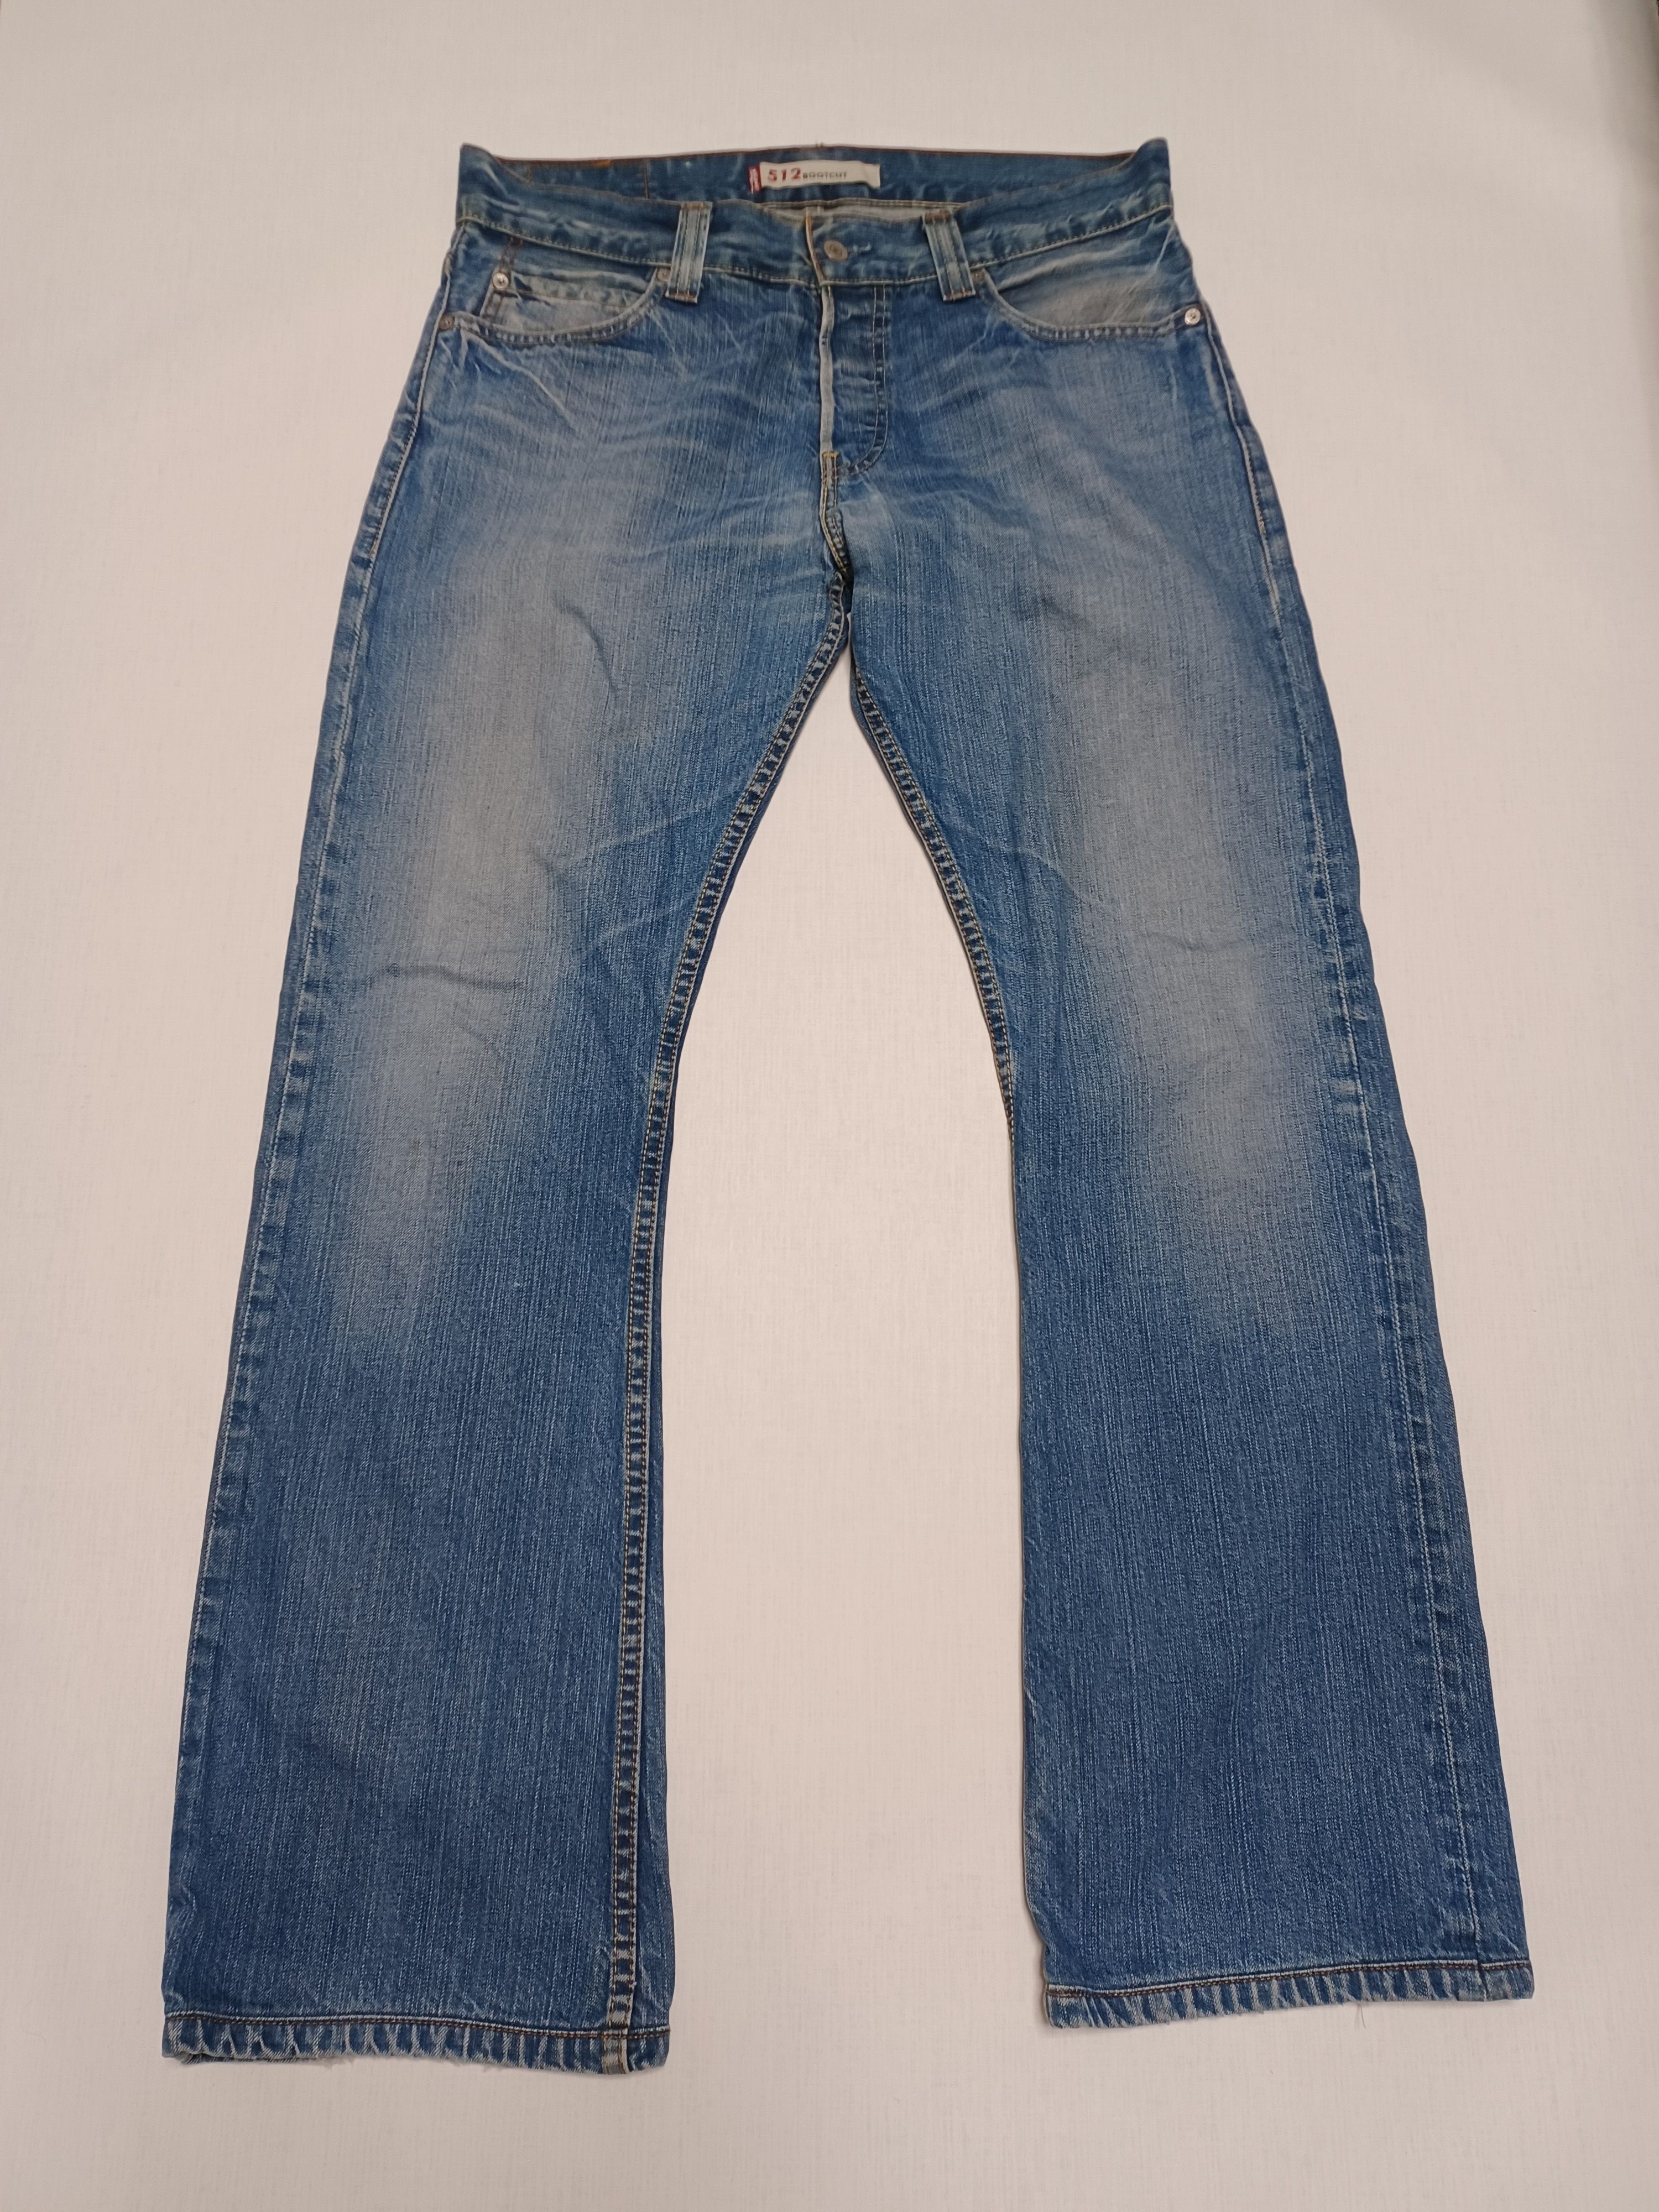 Pre-owned Avant Garde X Distressed Denim Vintage Levis 512 Bootcut Flare Jeans W33 L 34 Avantgarde In Blue